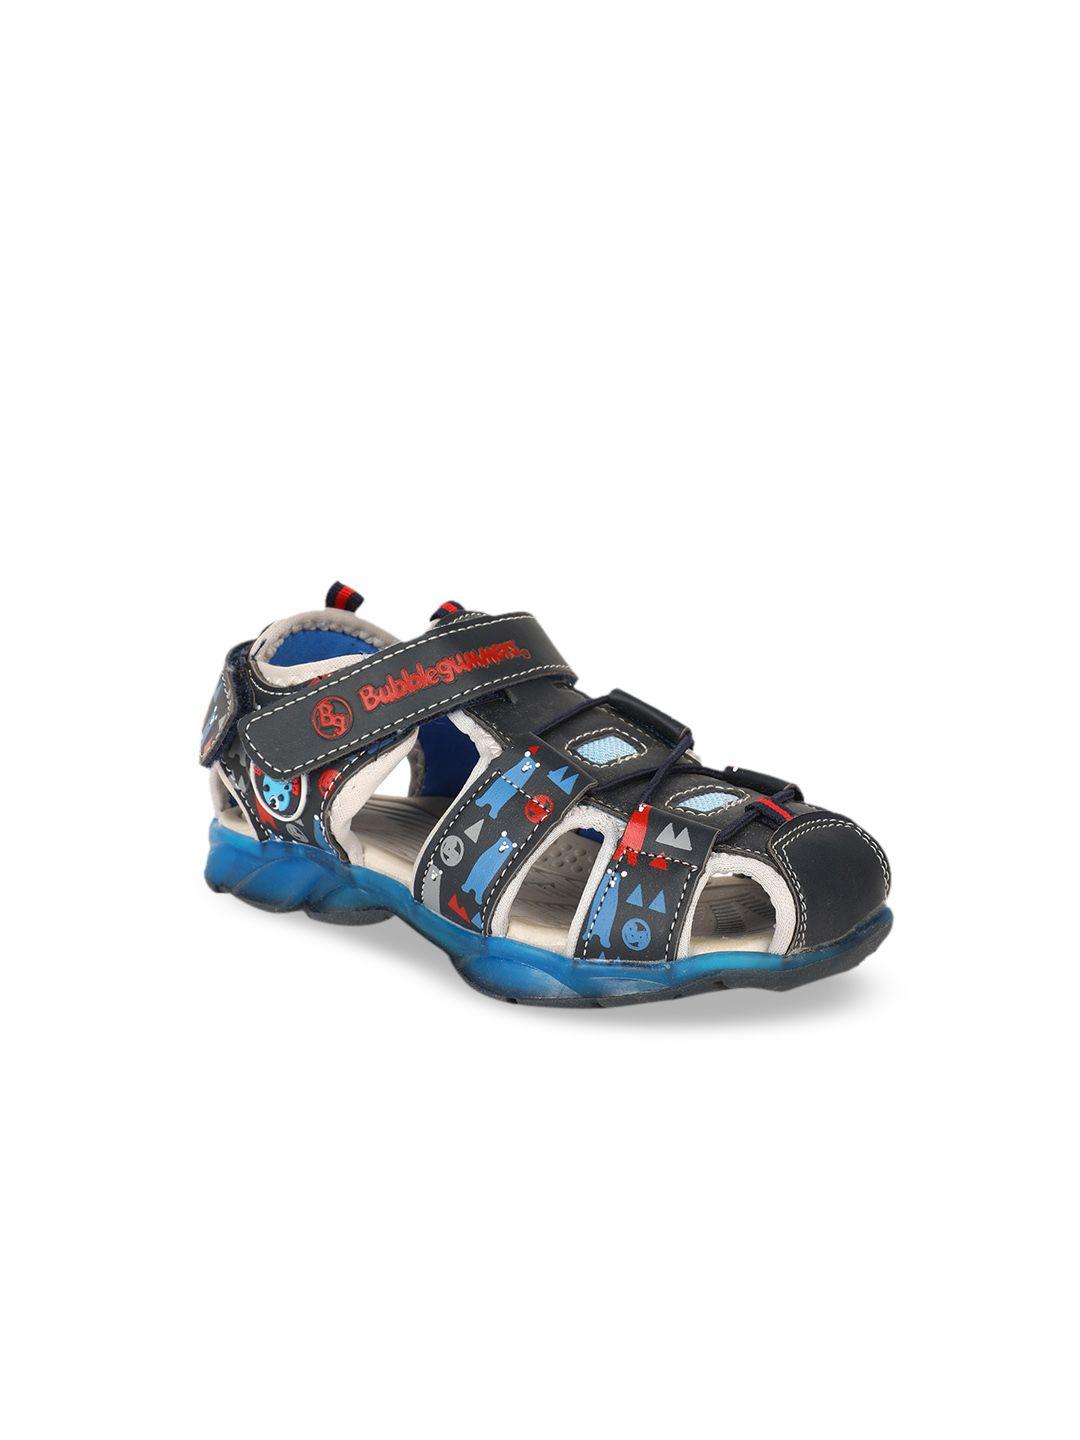 bubblegummers boys blue & red comfort sandals